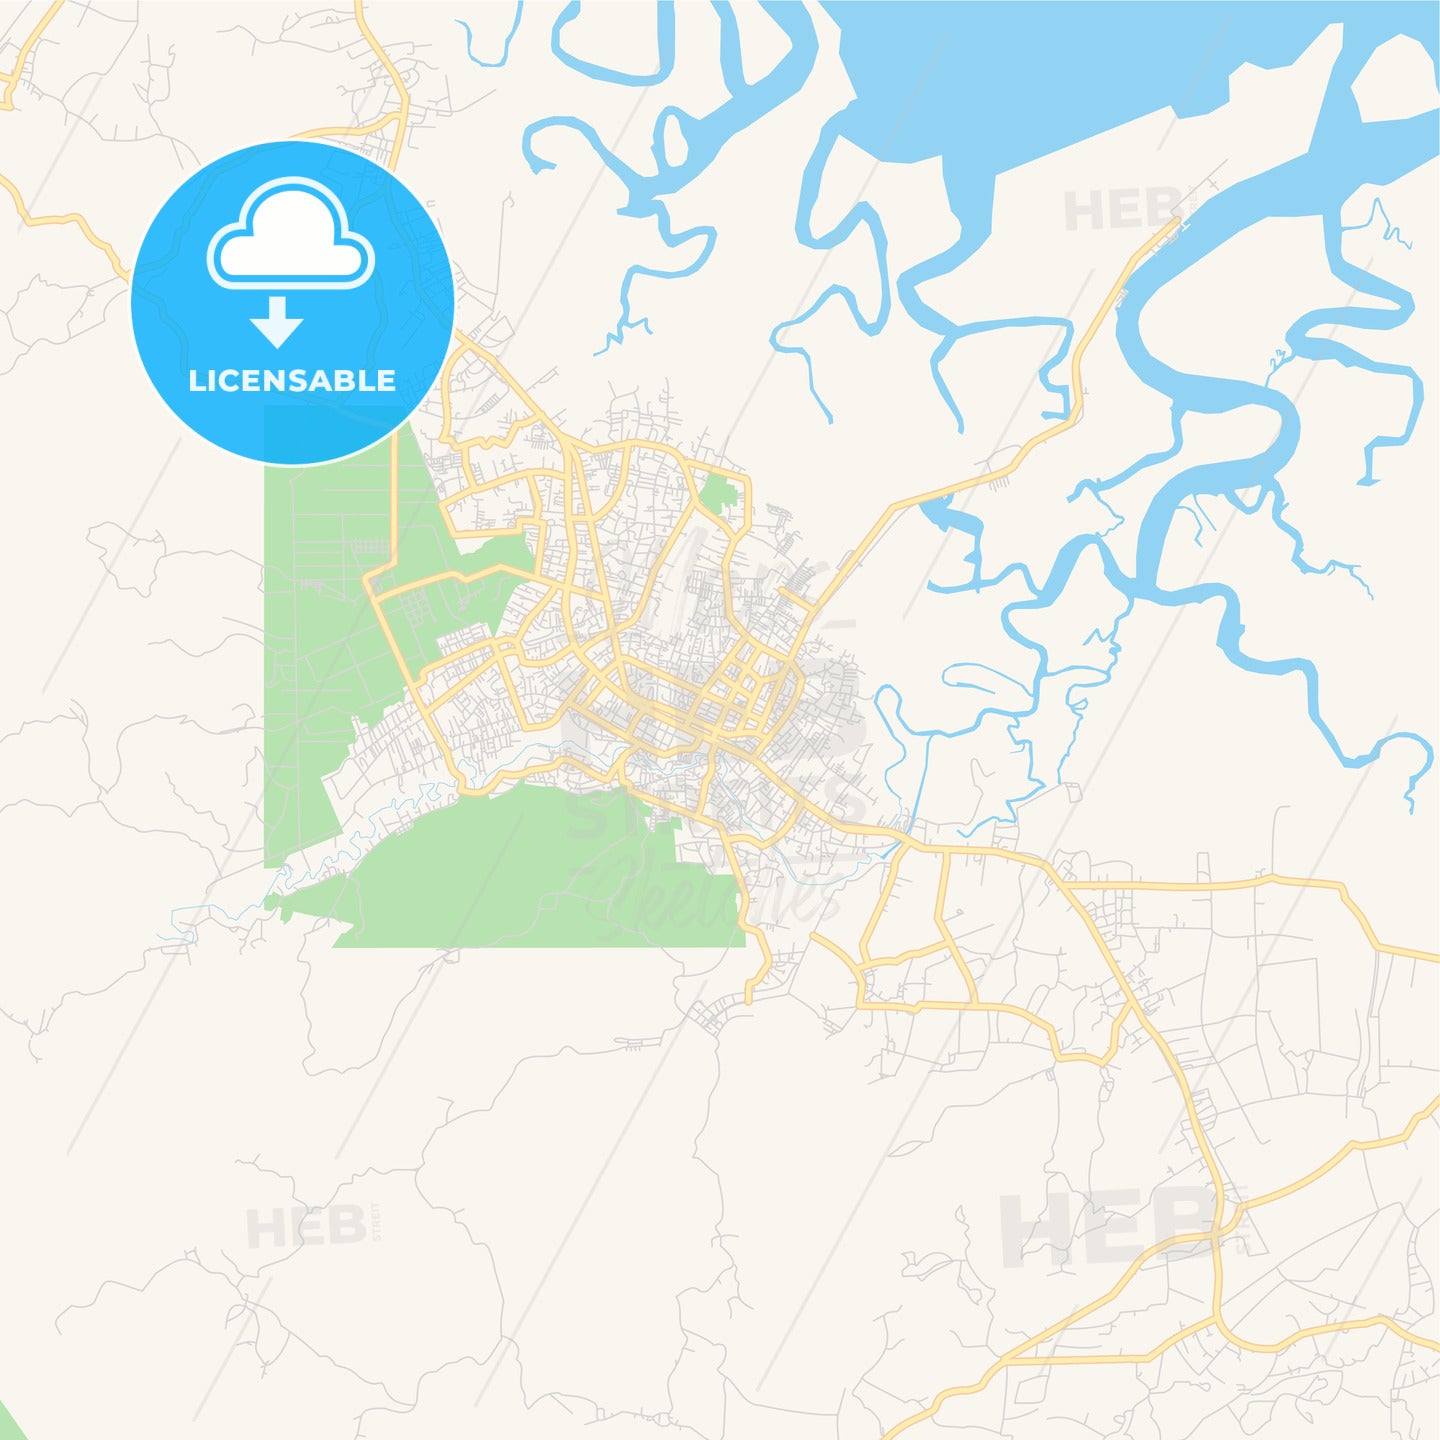 Printable street map of Langsa, Indonesia